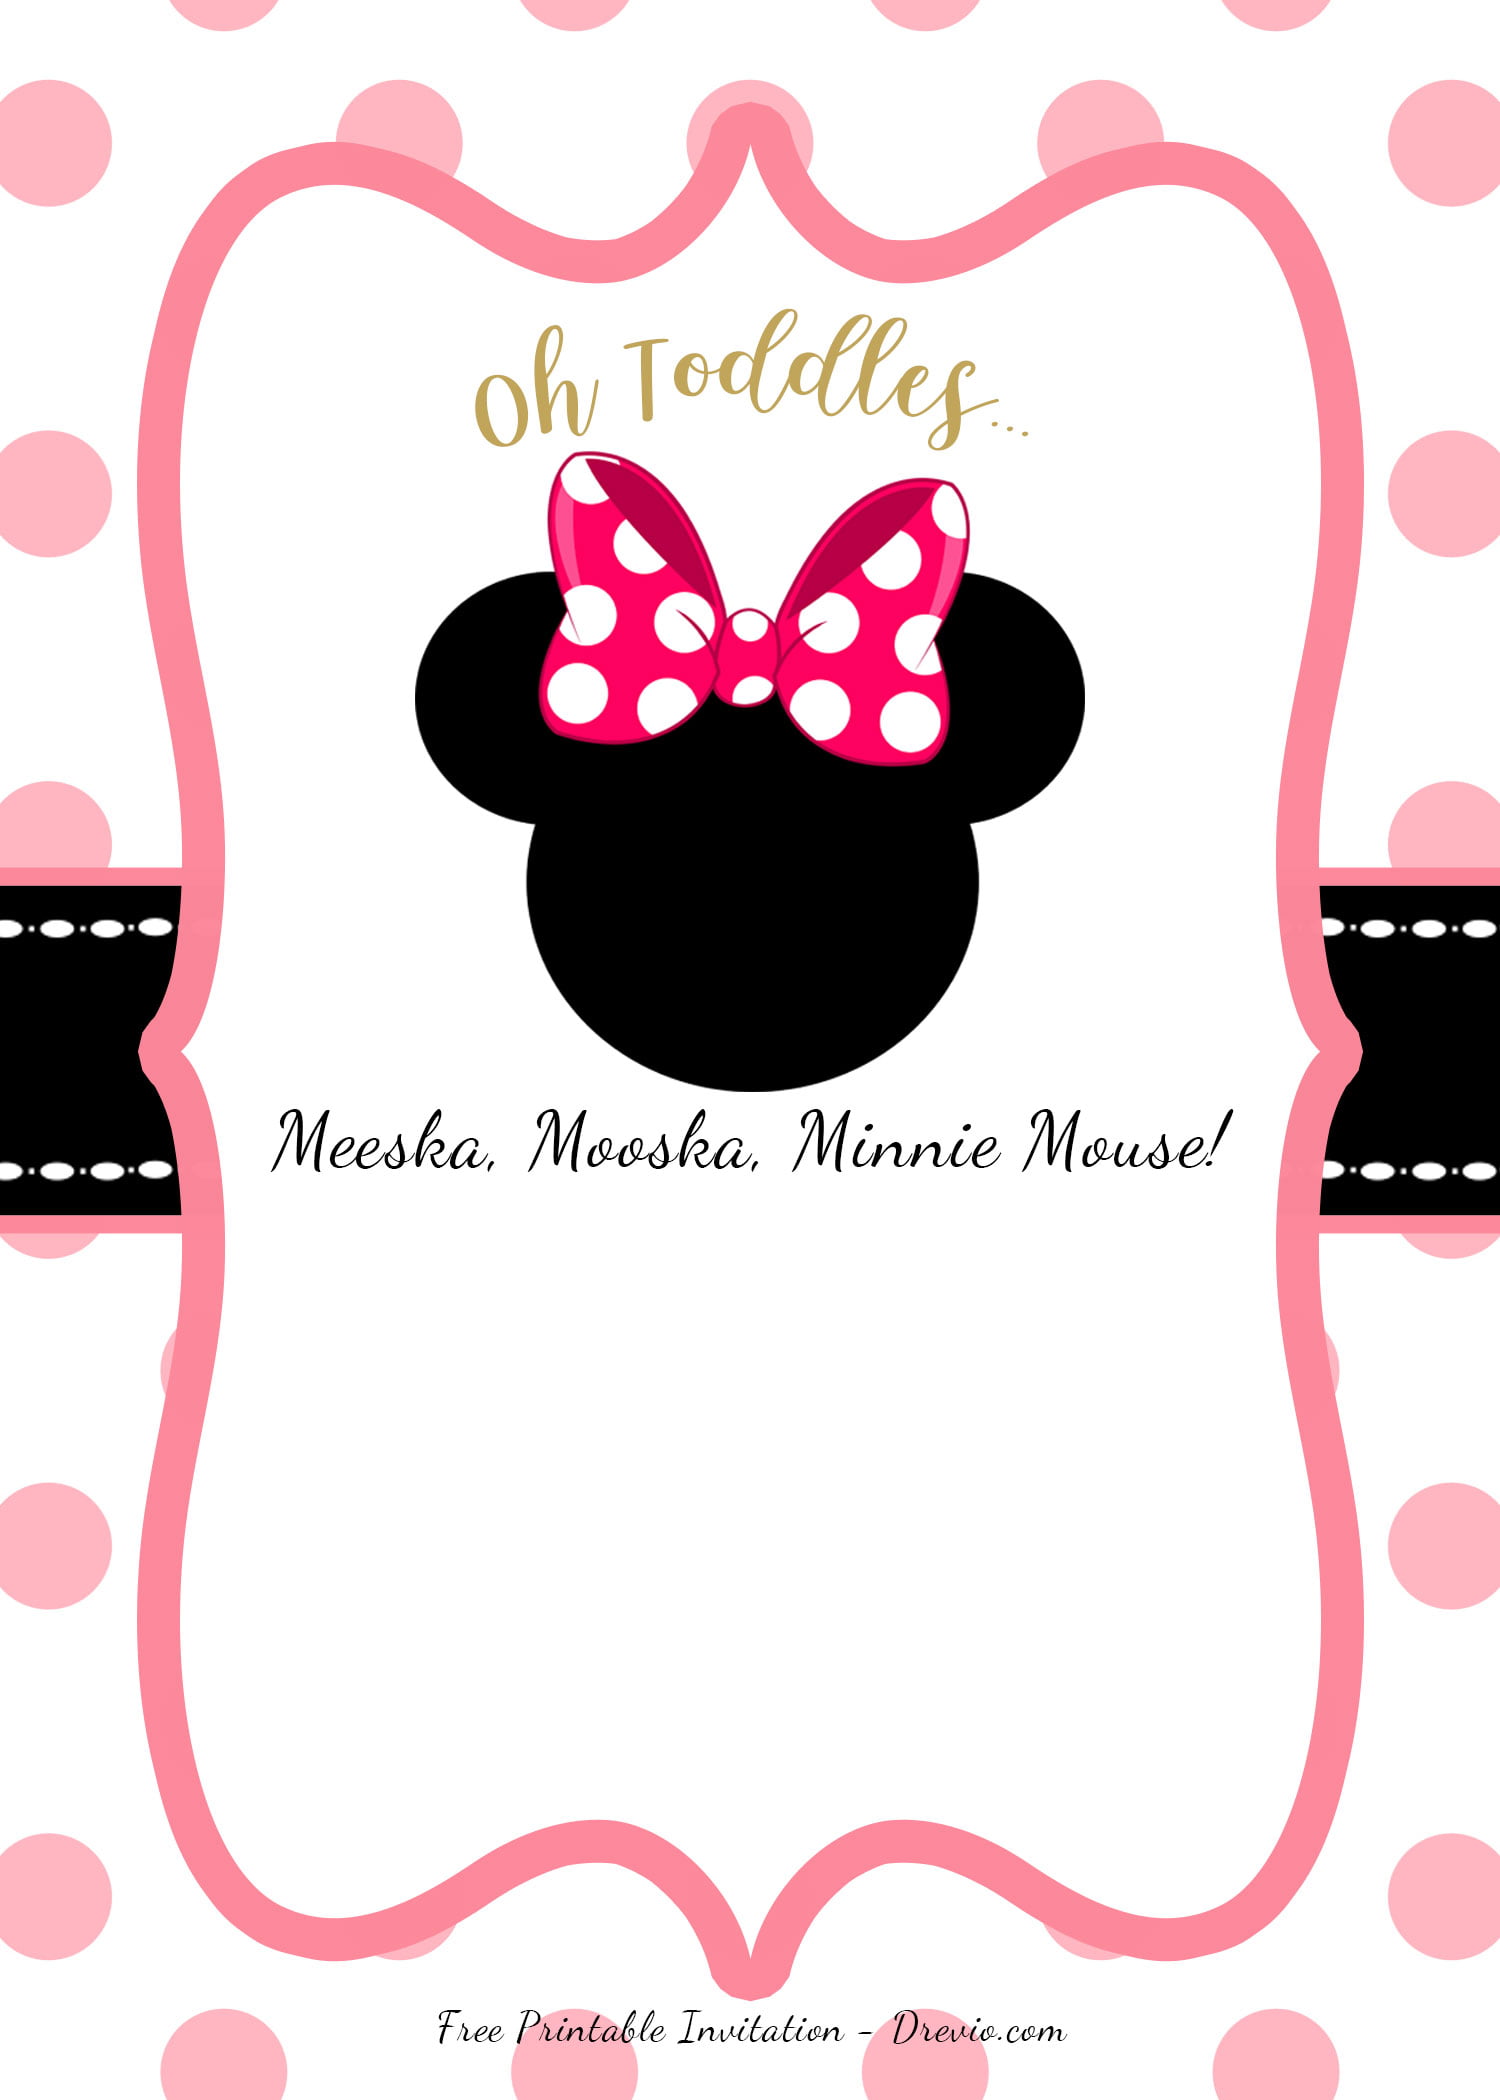 FREE Pink Minnie Mouse Birthday Party DIY Printable Invitation FREE